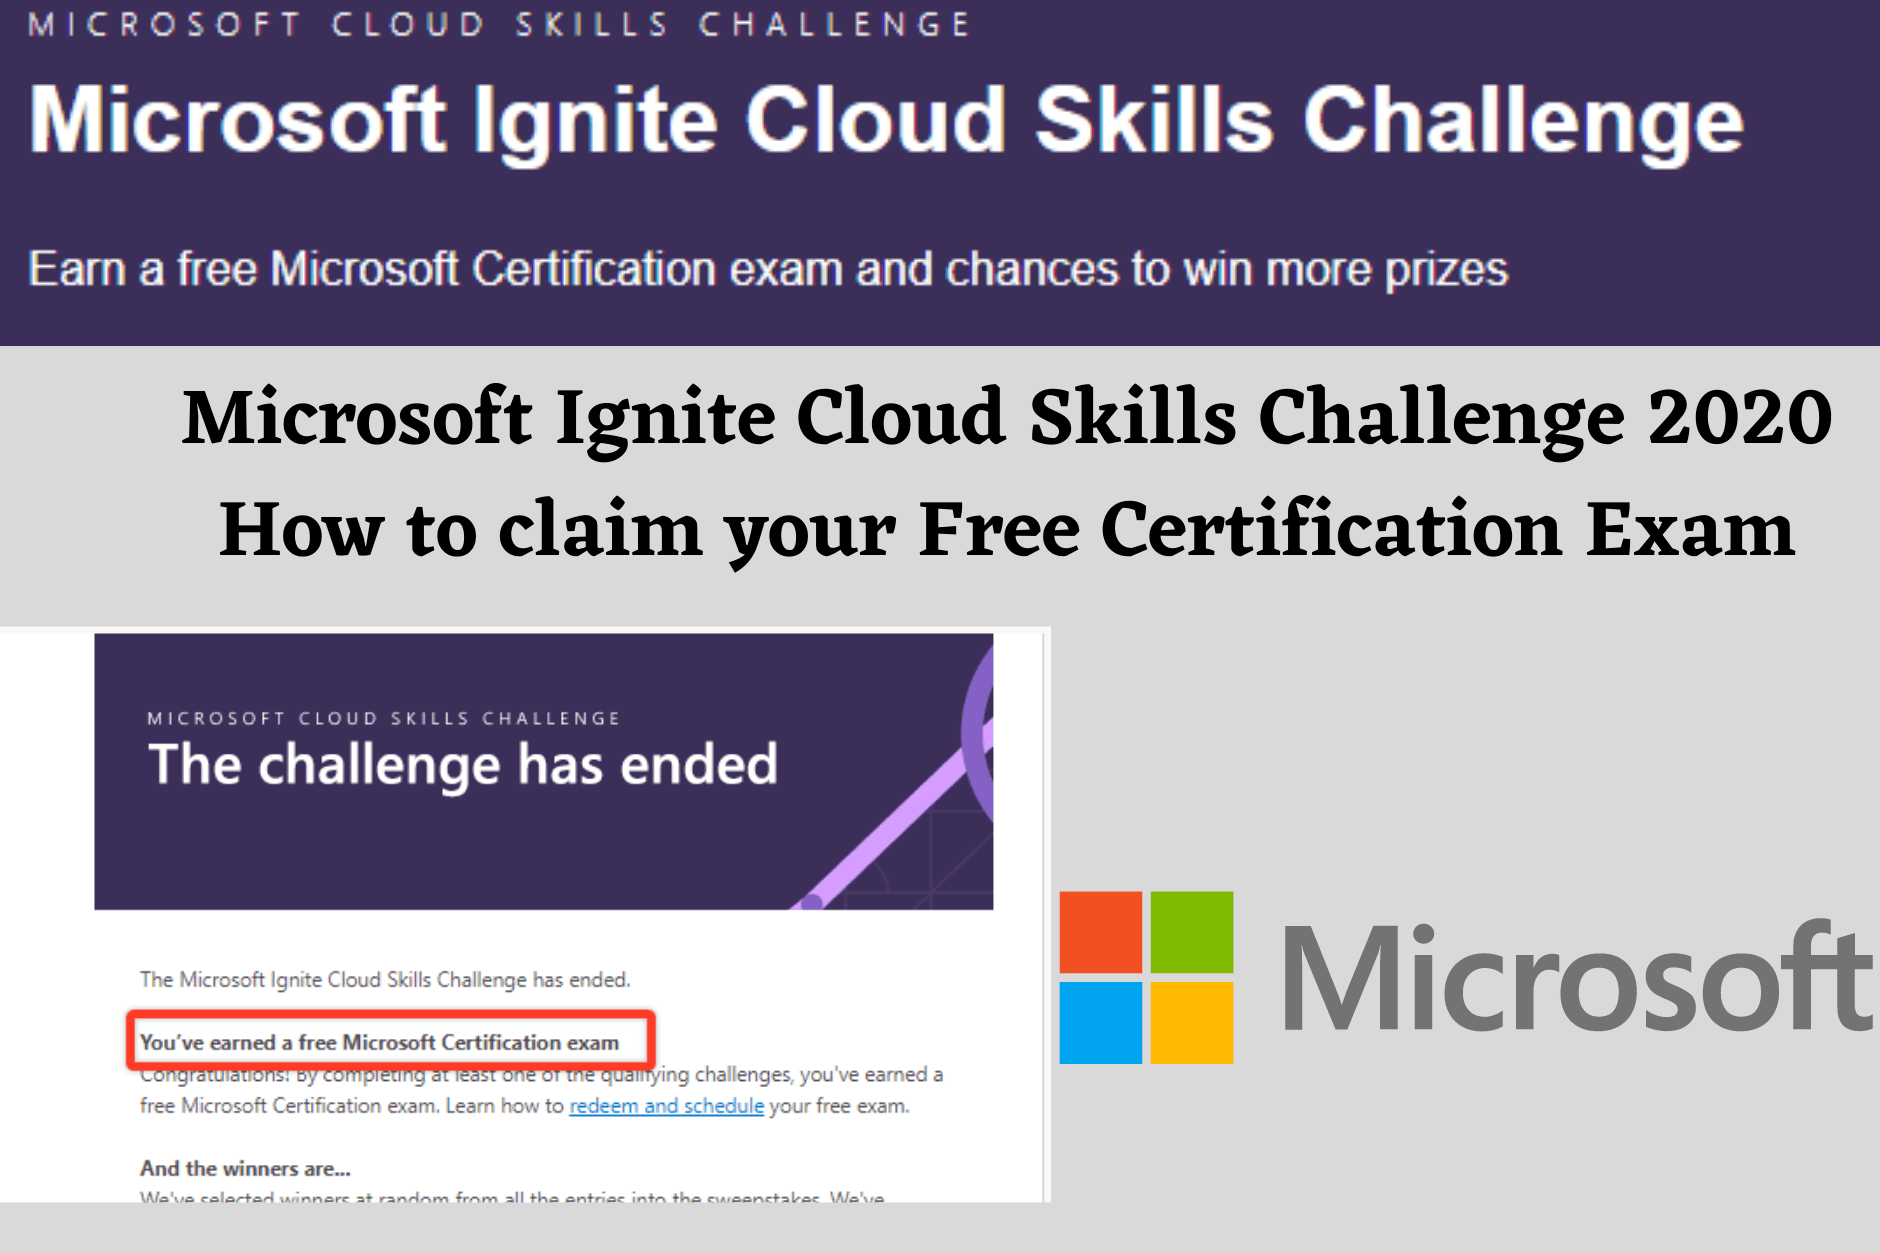 Microsoft Ignite Cloud Skills Challenge 2020 How to claim your Free